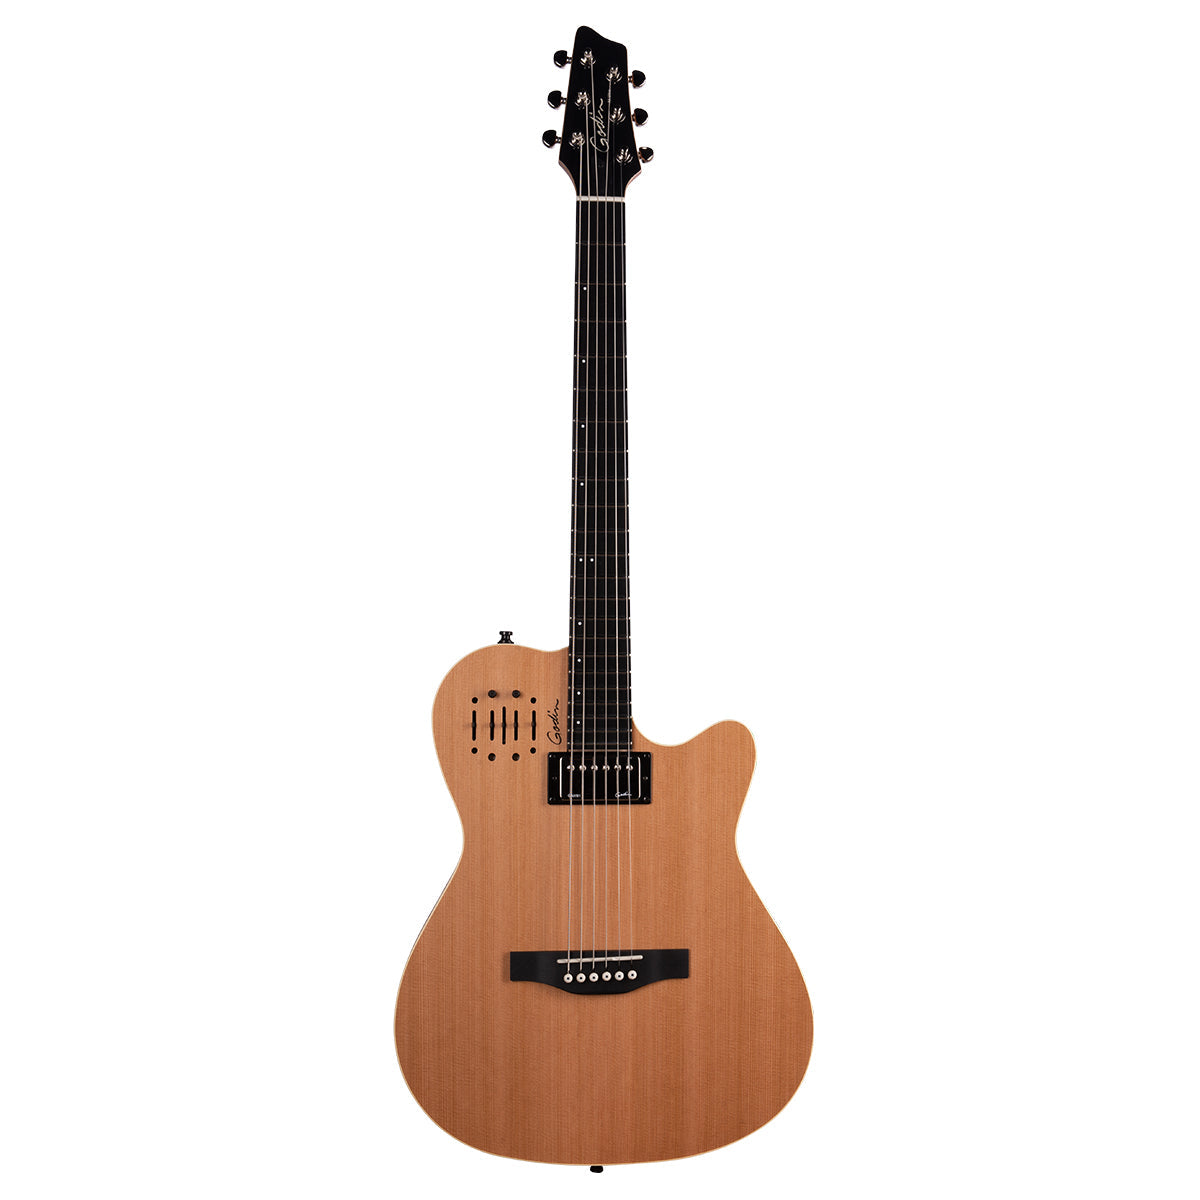 Godin A6 Ultra Electric Guitar ~ Natural SG, Electric Guitar for sale at Richards Guitars.